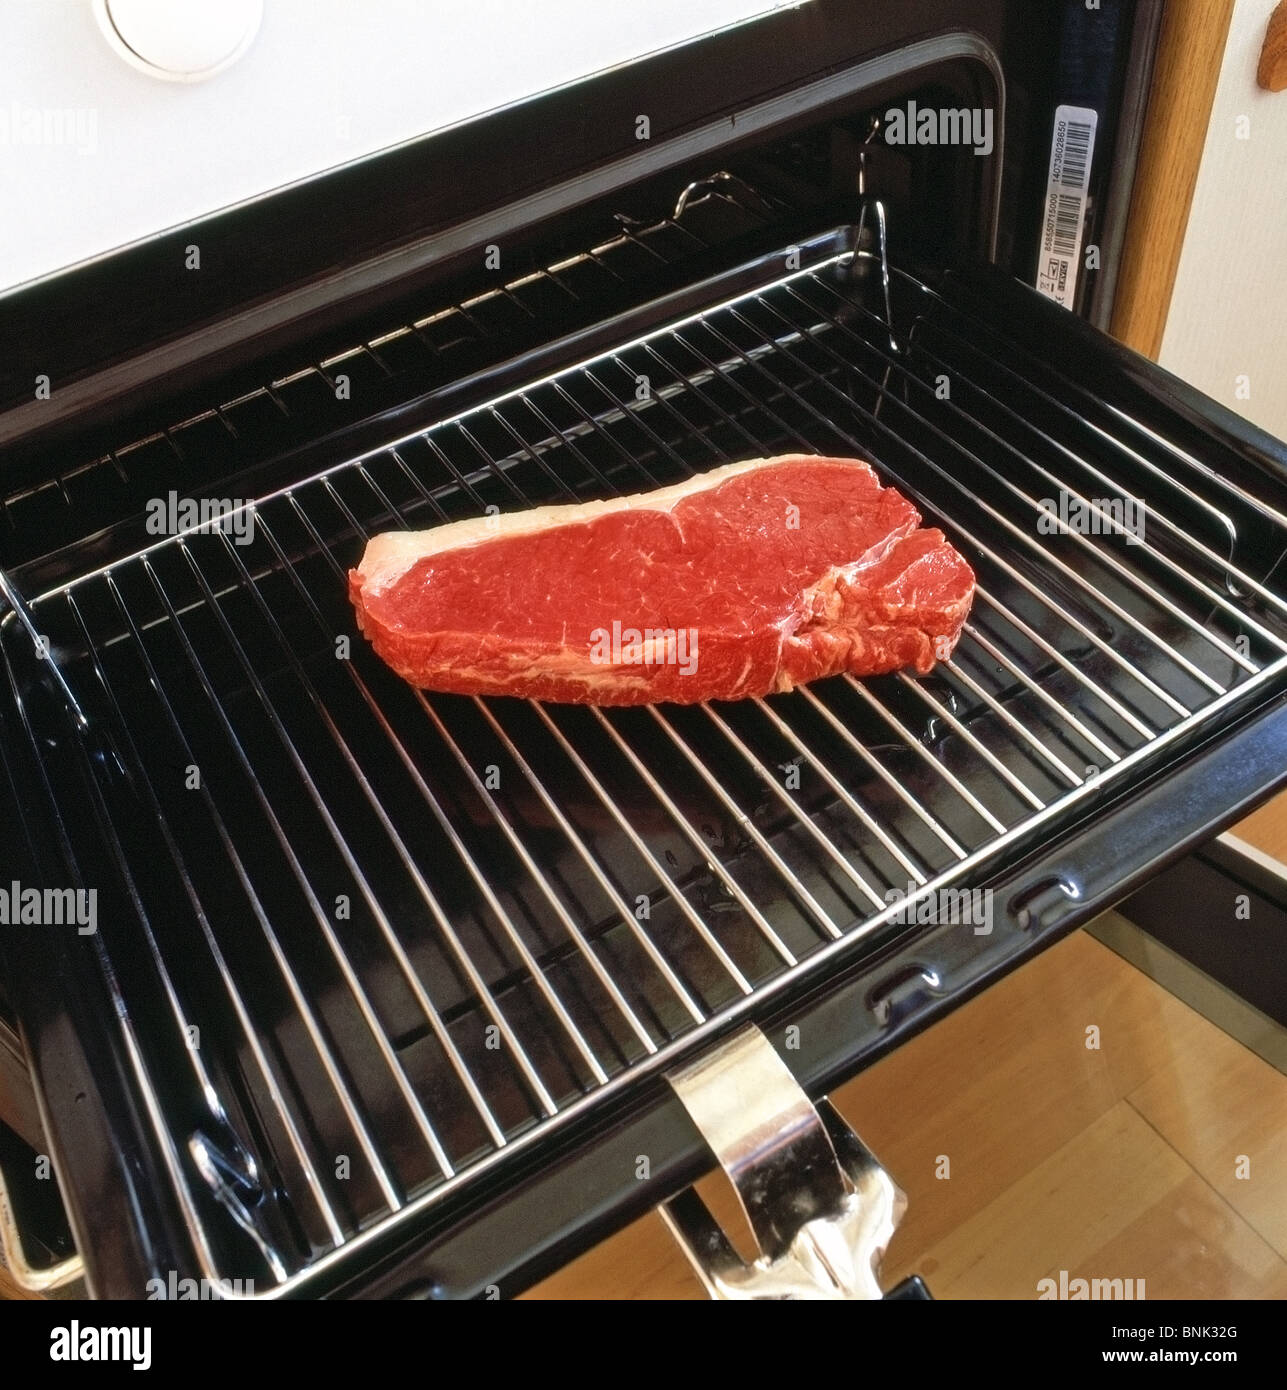 https://c8.alamy.com/comp/BNK32G/raw-sirloin-steak-on-a-grill-pan-being-placed-under-an-oven-grill-BNK32G.jpg